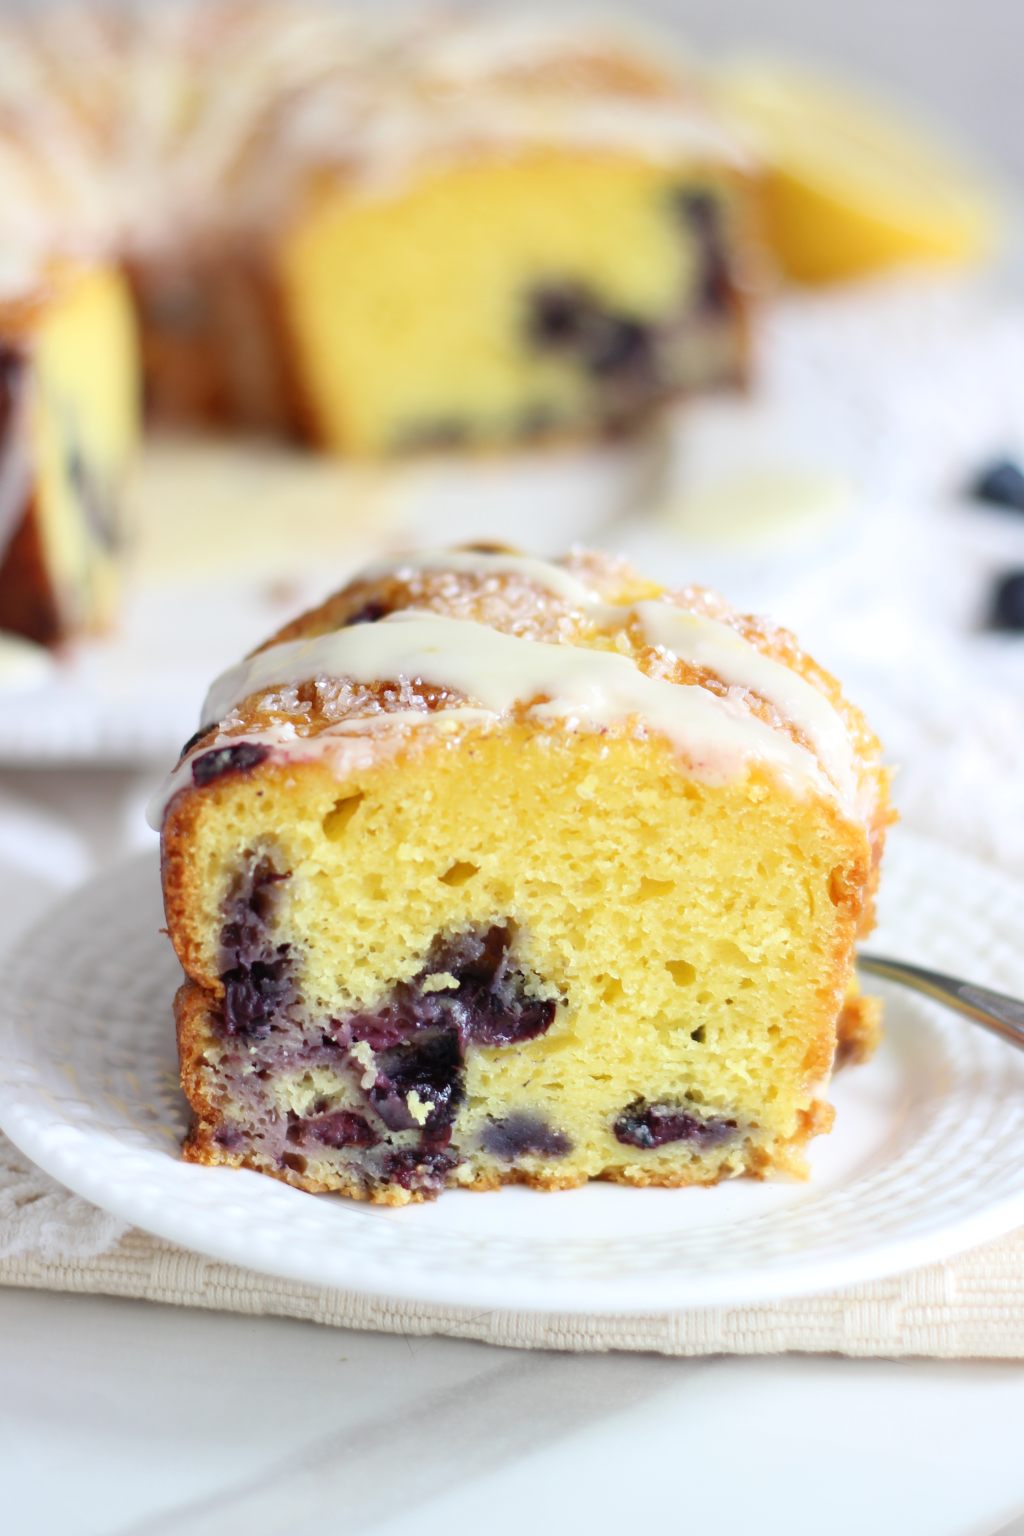 Lemon Blueberry Bundt Cake with Lemon Glaze